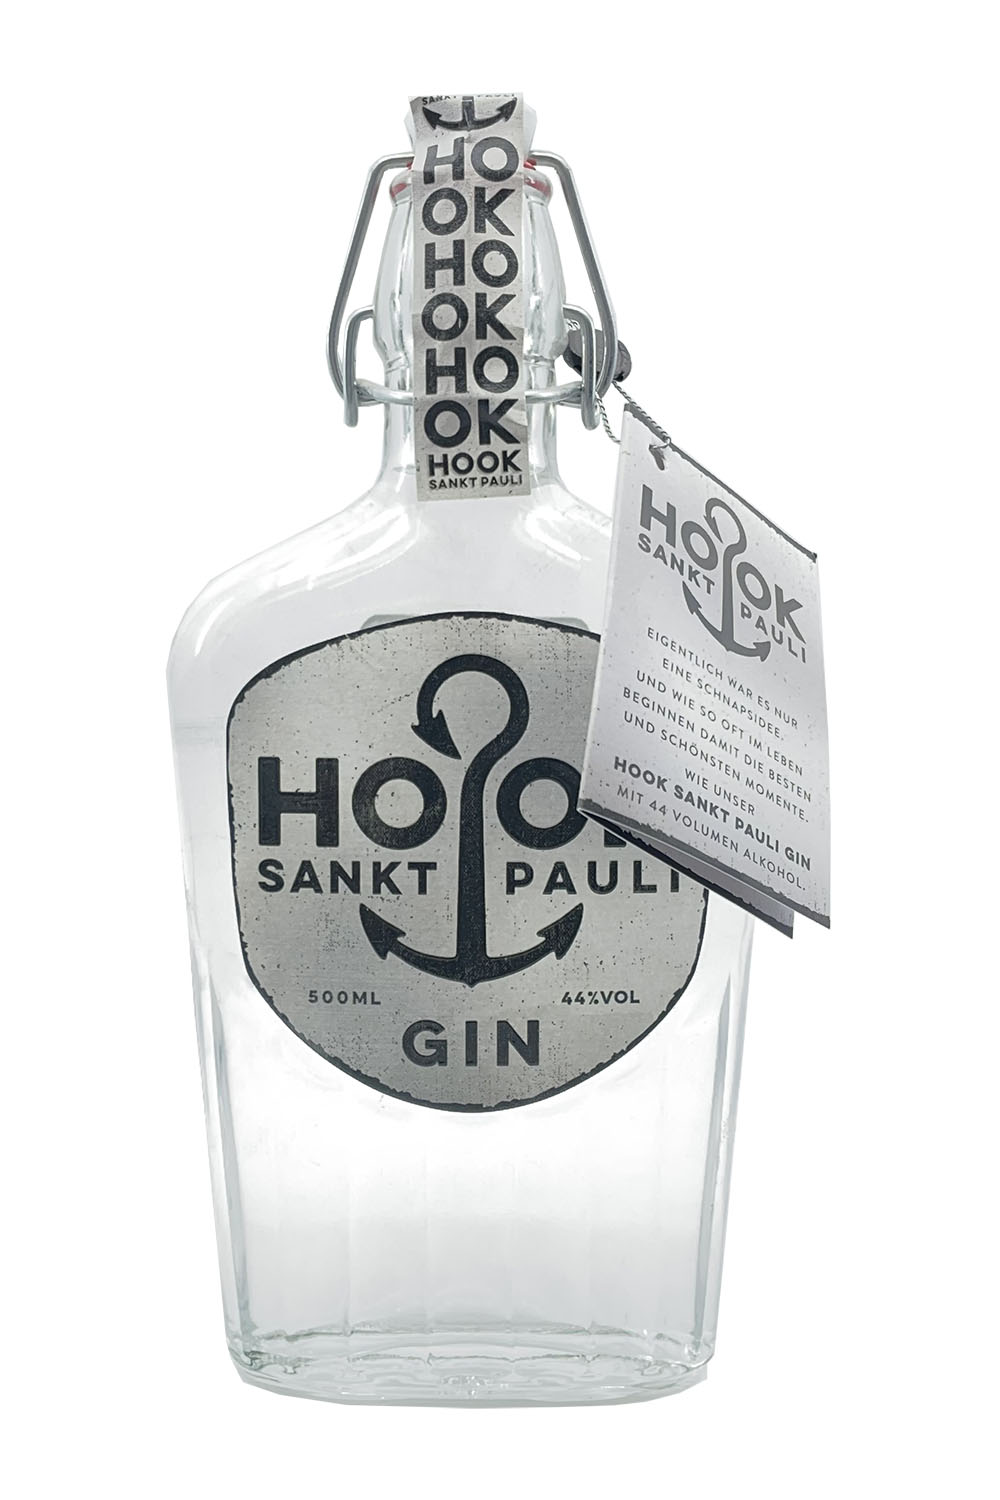 Hook Gin ~ Sank Pauli Buddelflasche ~ 0,5l 44%vol.